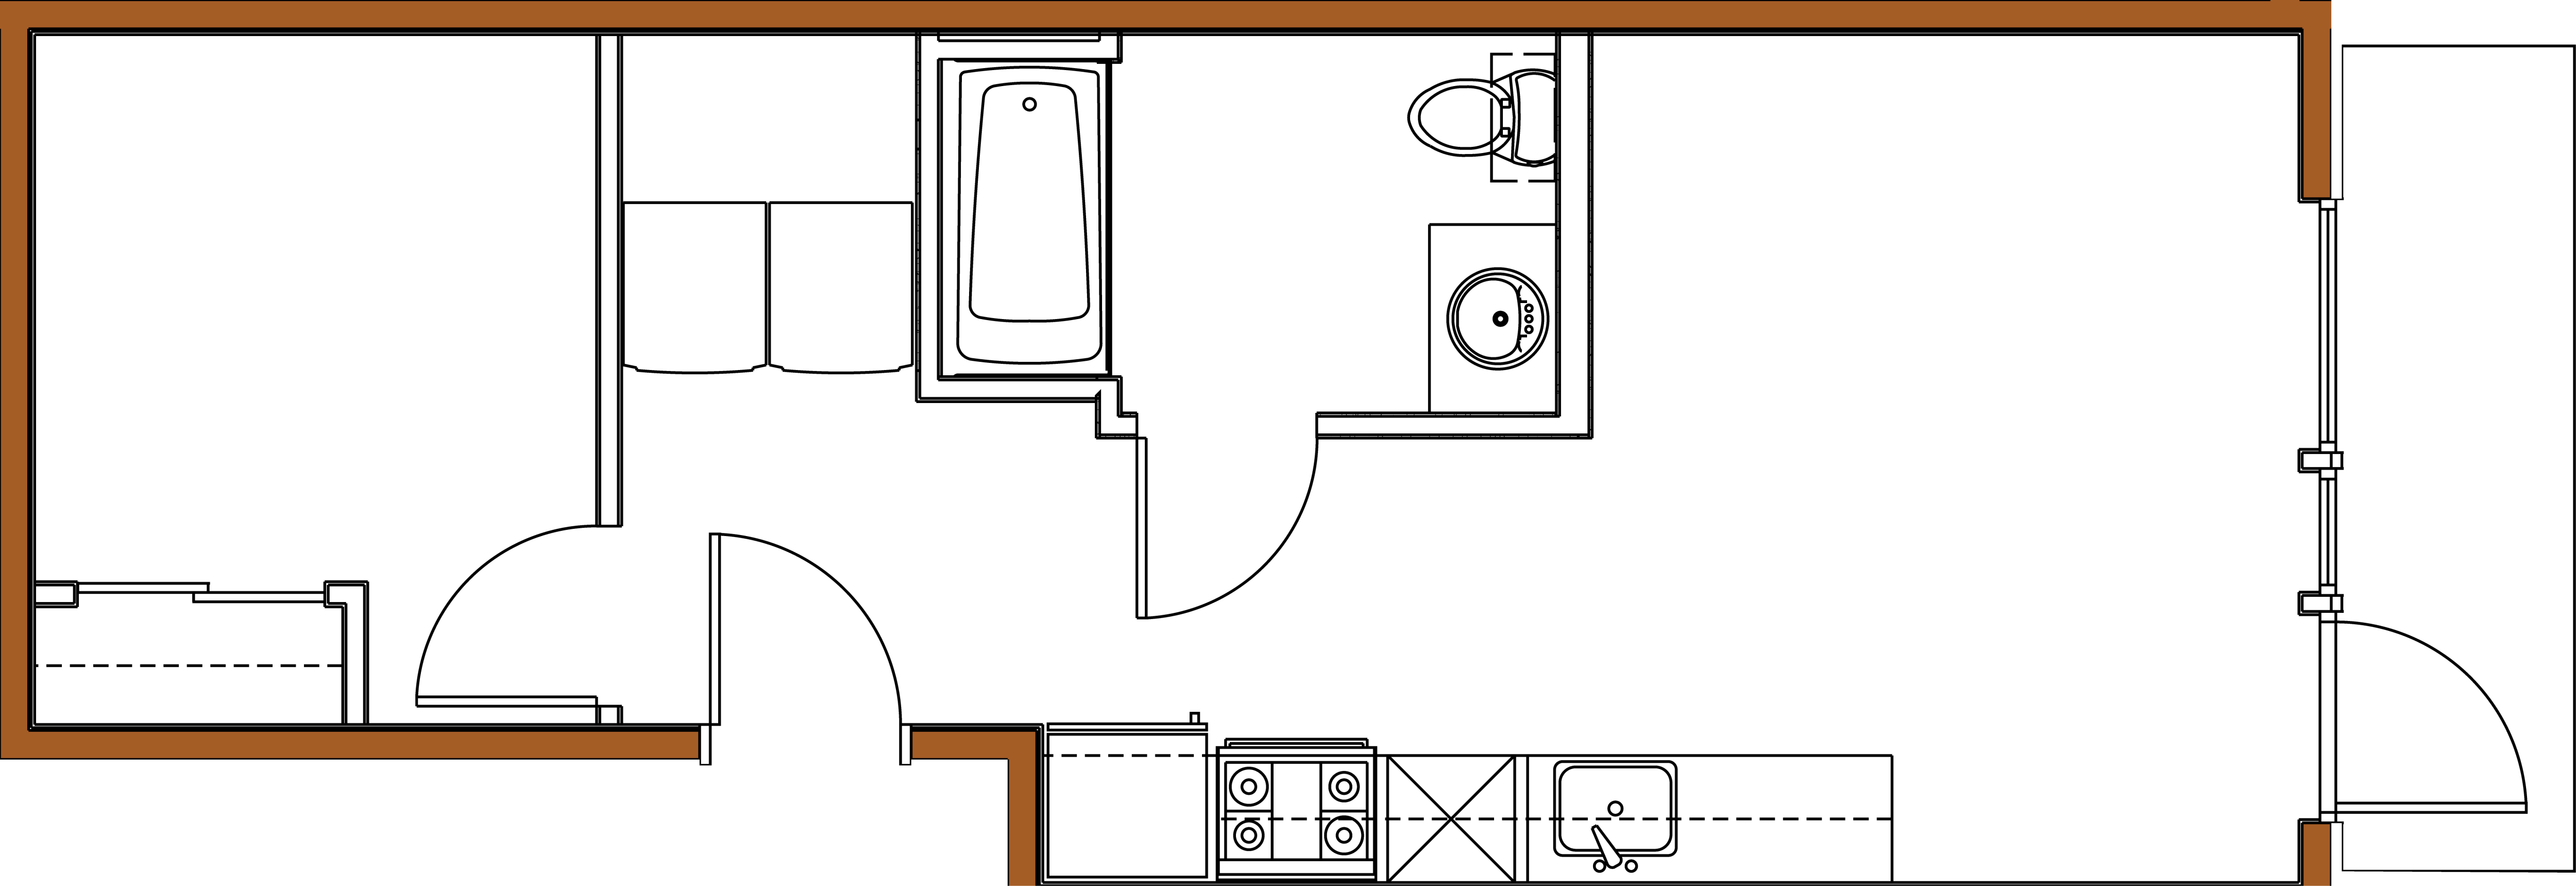 Yukon Flats, 1 Bedroom, Galley - Floorplan.png